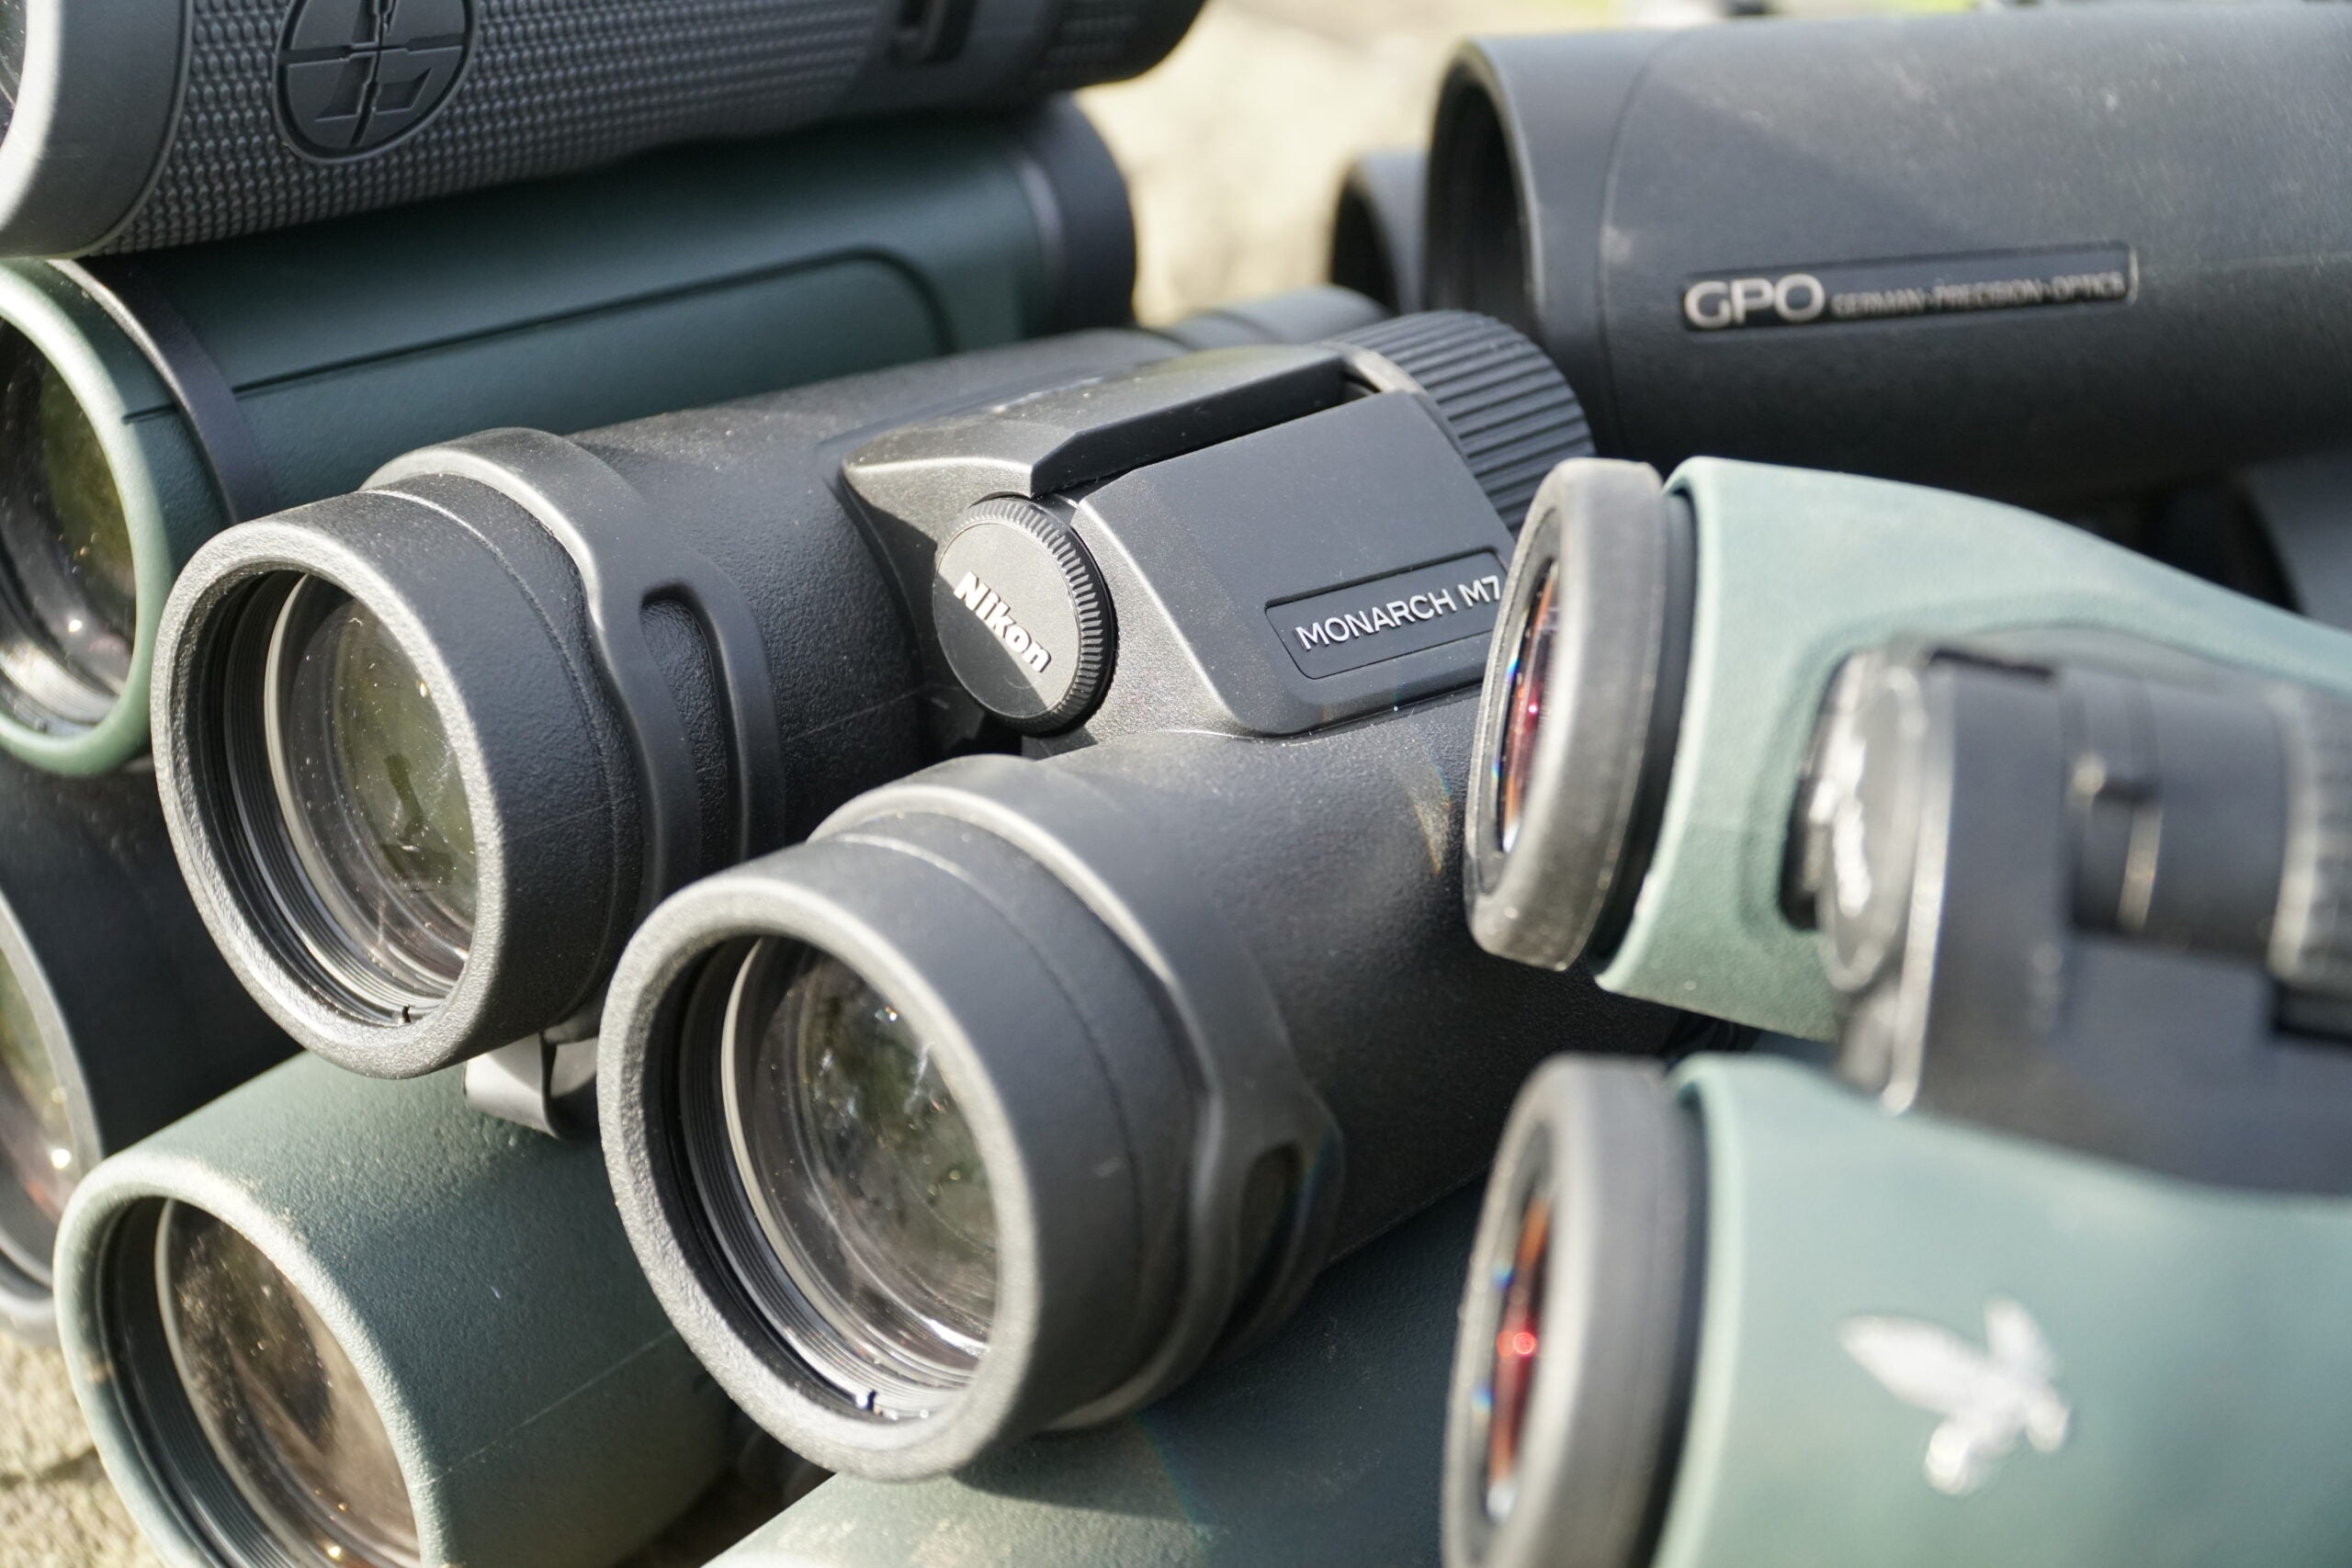 Nikon Monarch M7 10x42 binocular resting among other binoculars being tested.